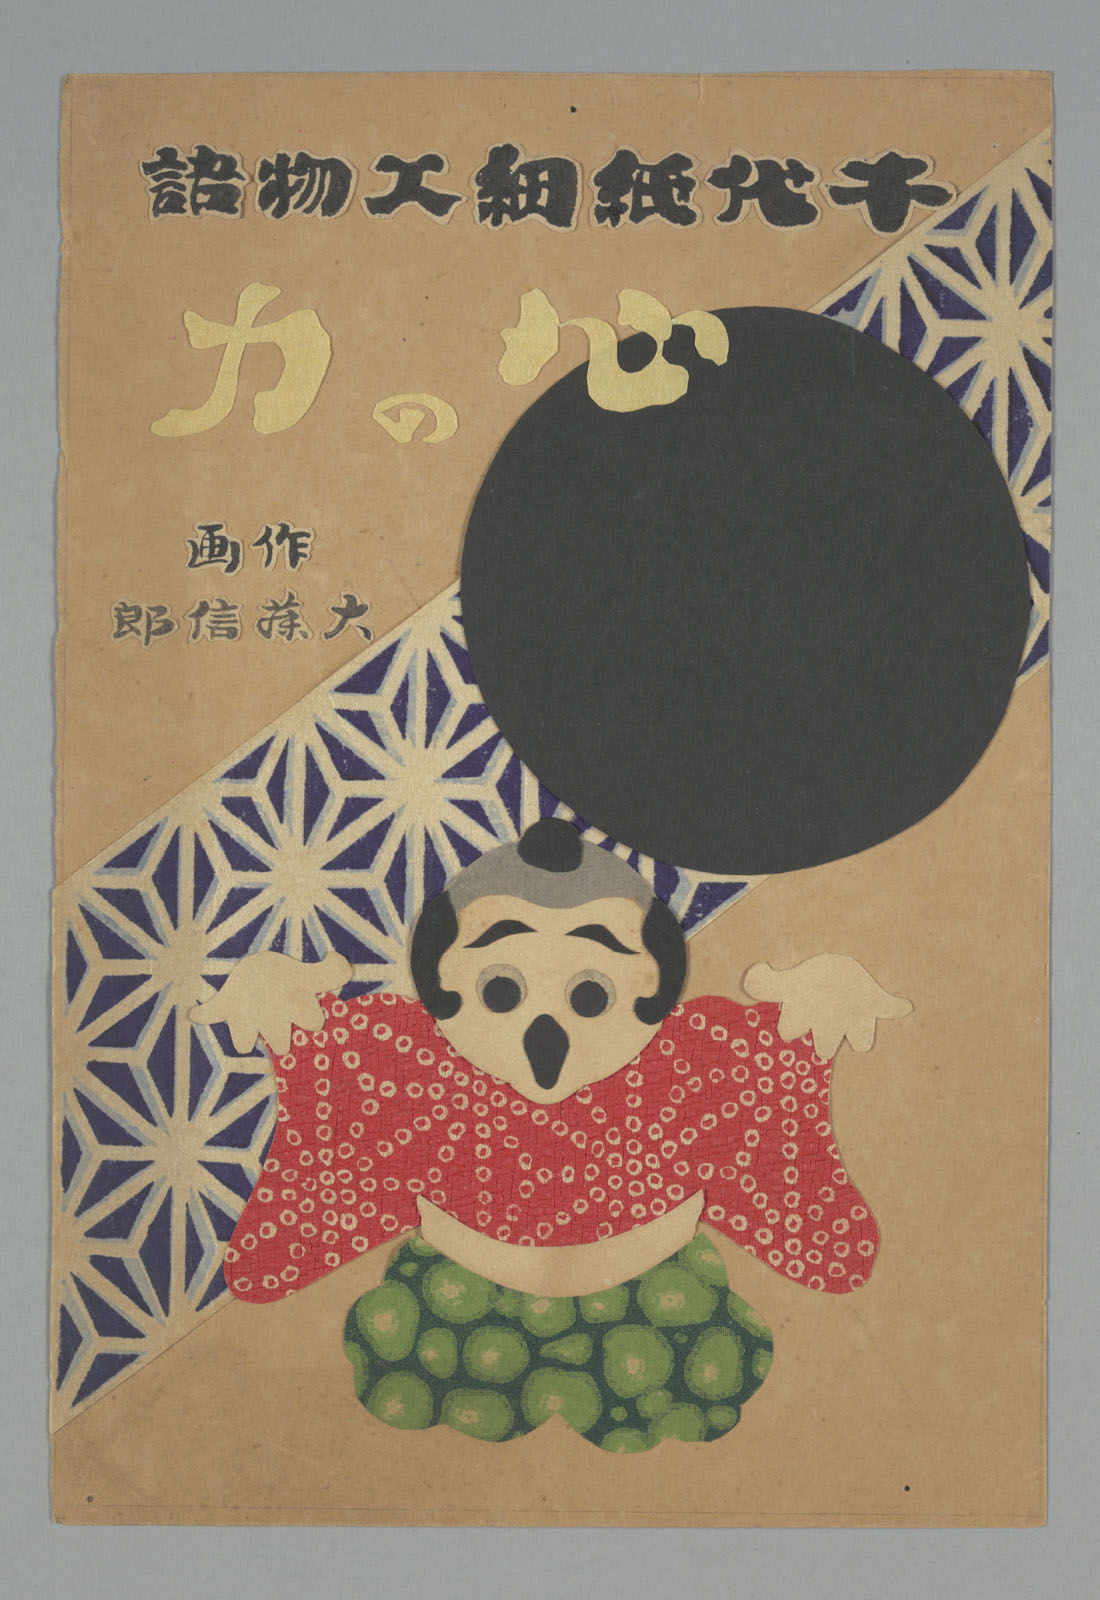 Publicity <i>chiyogami</i> artwork for <i>Will Power</i>, 1931